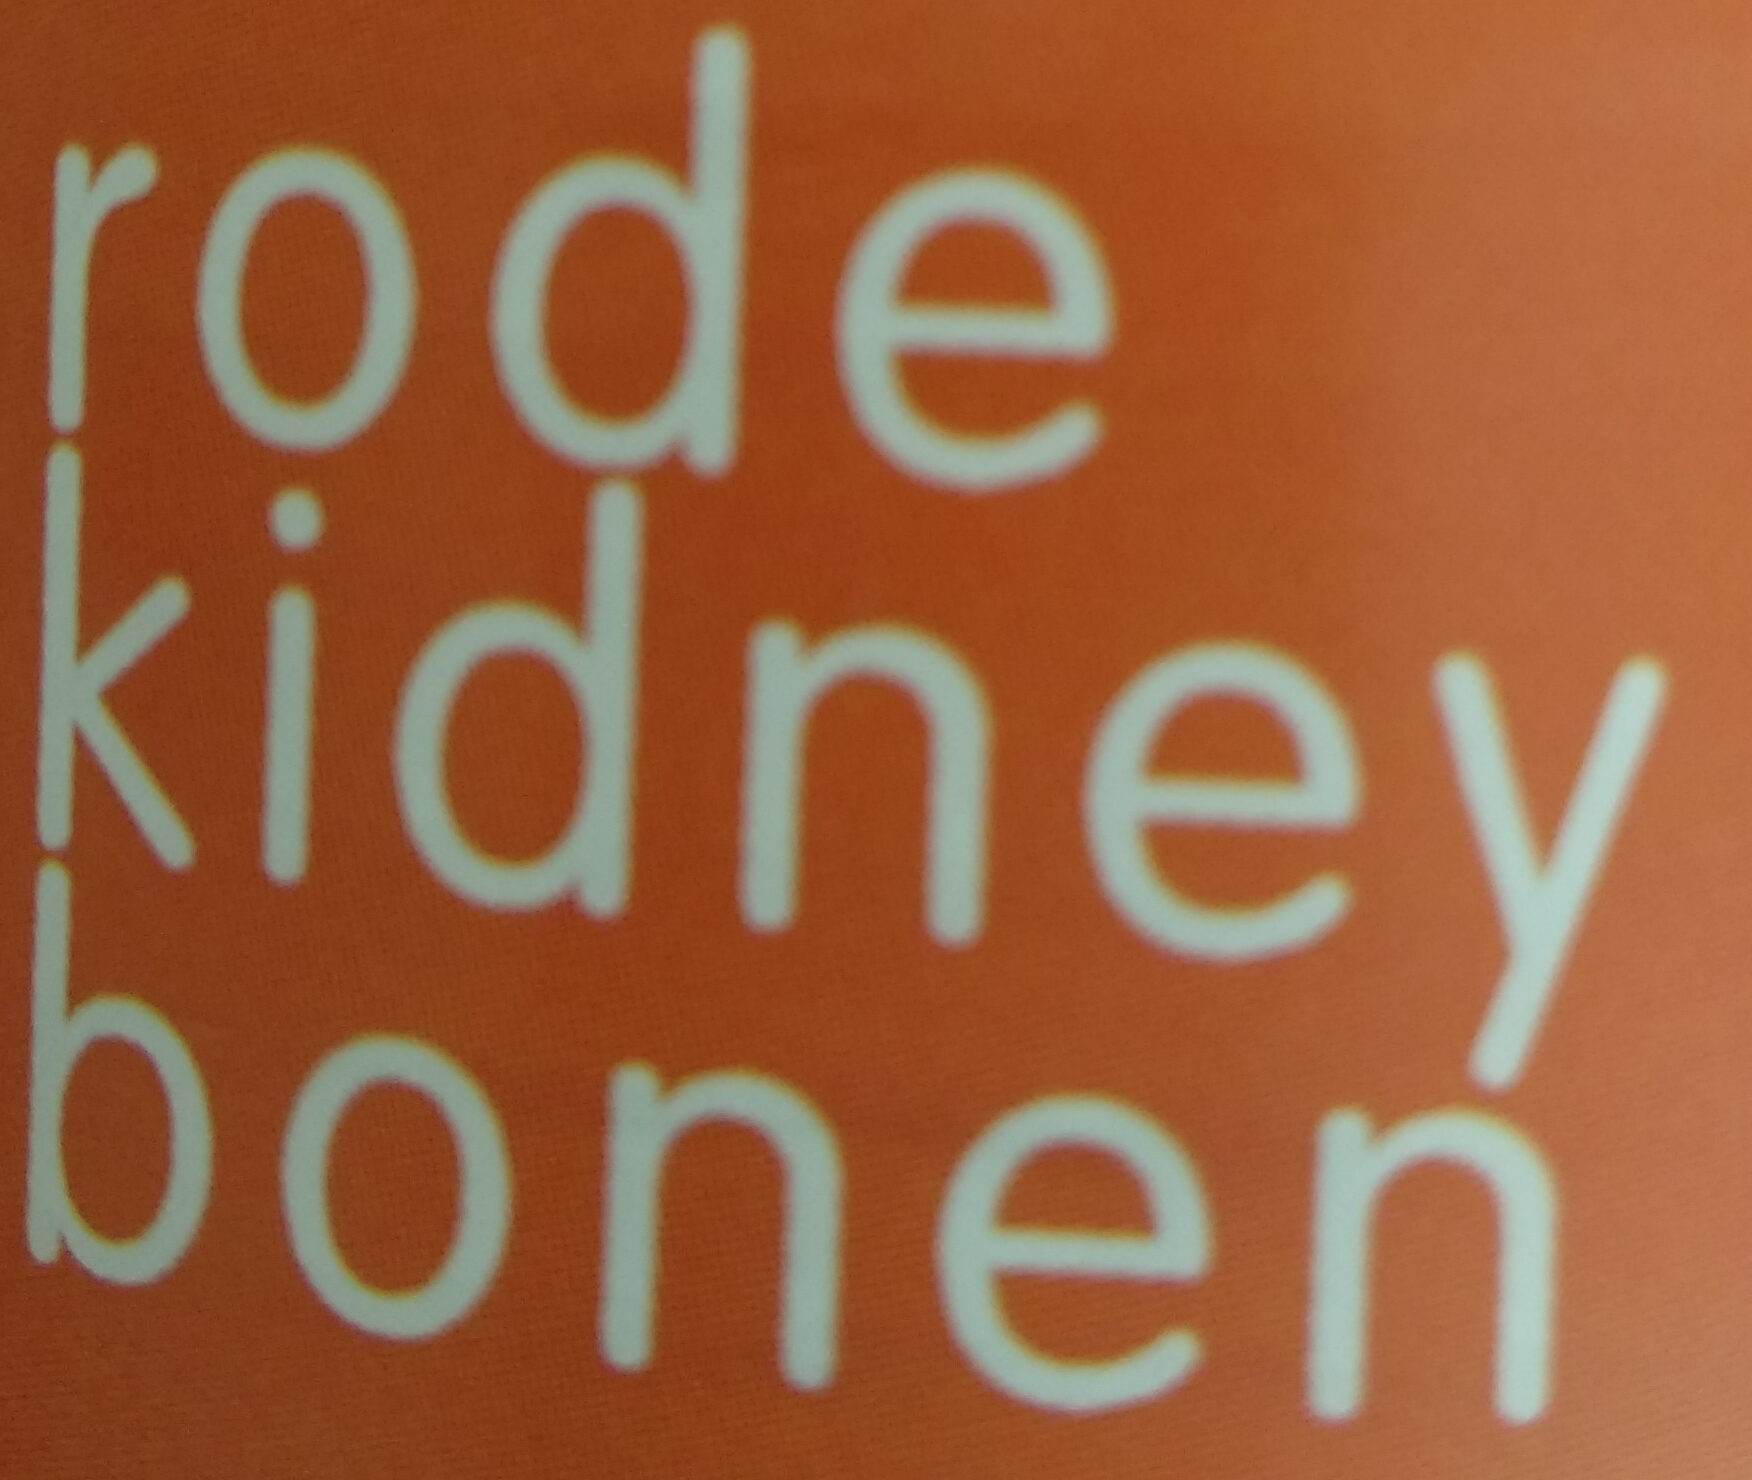 rode kidney bonen - Ingrediënten